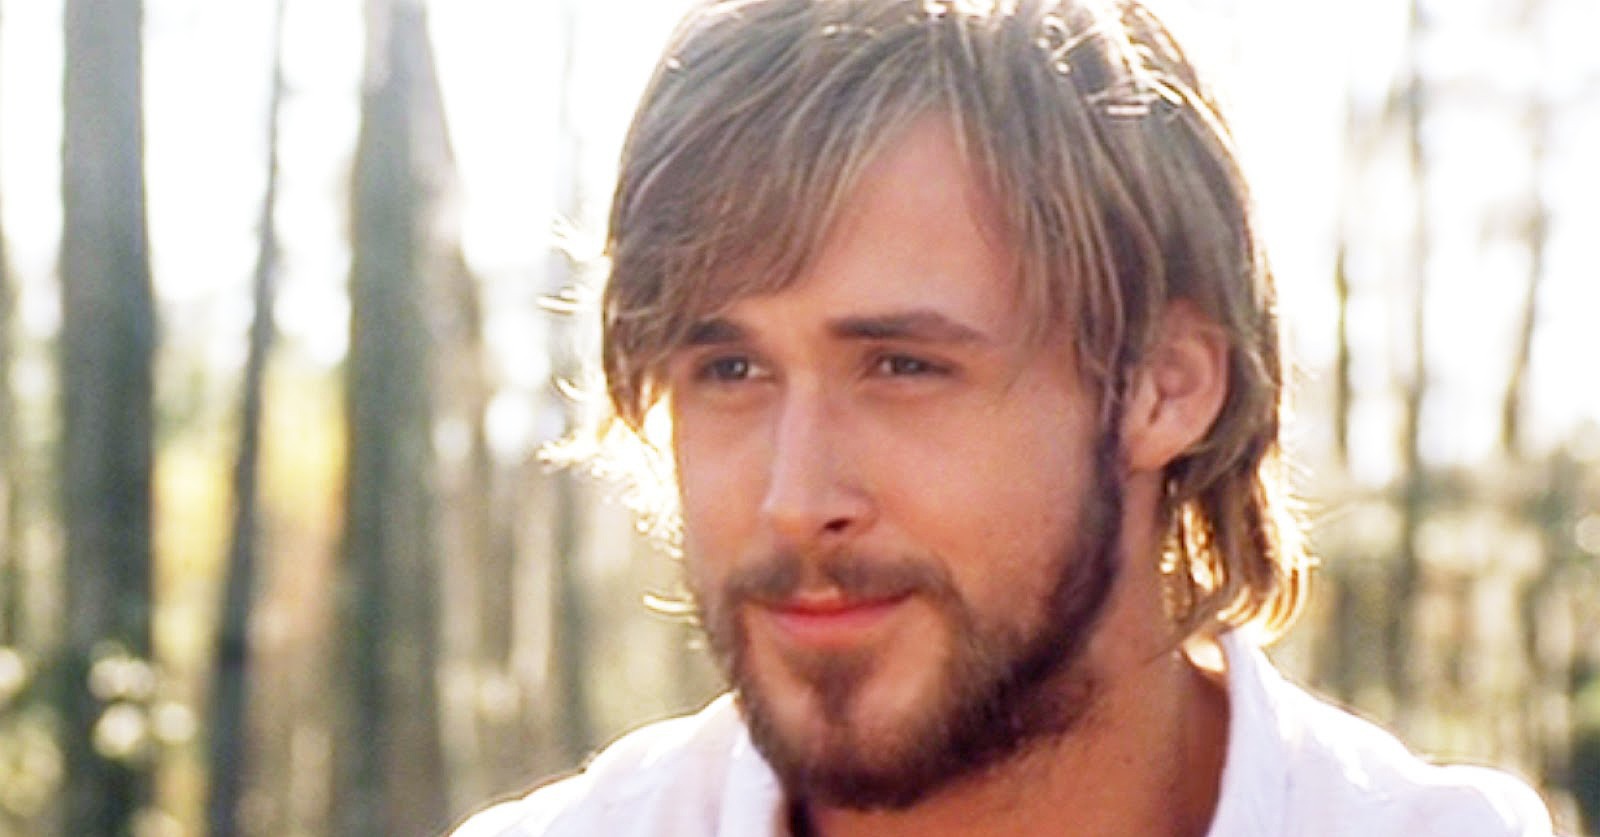 The Scruffy Smirk Ryan Goslings Sexiest Moments From The Notebook Popsugar Celebrity Australia 